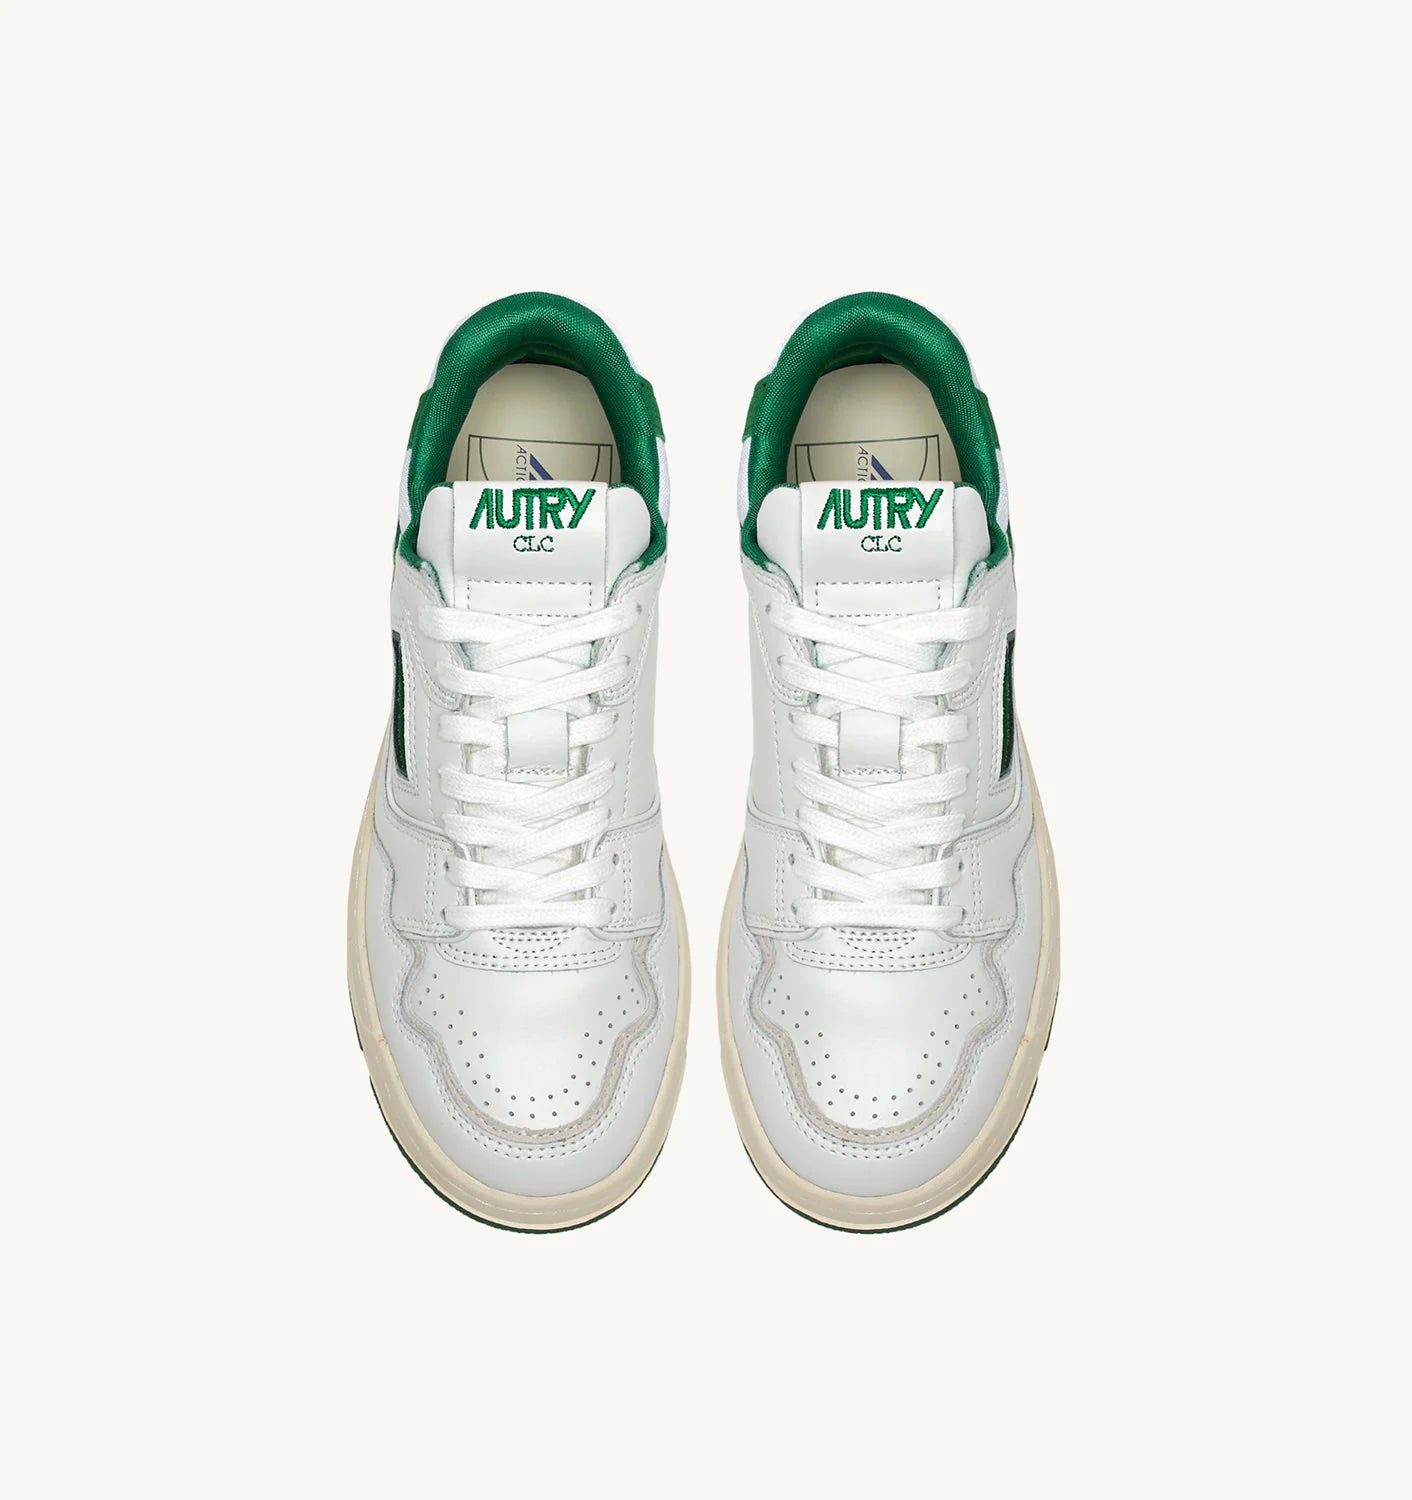 Autry MM09 White Amazon Clc sneakers